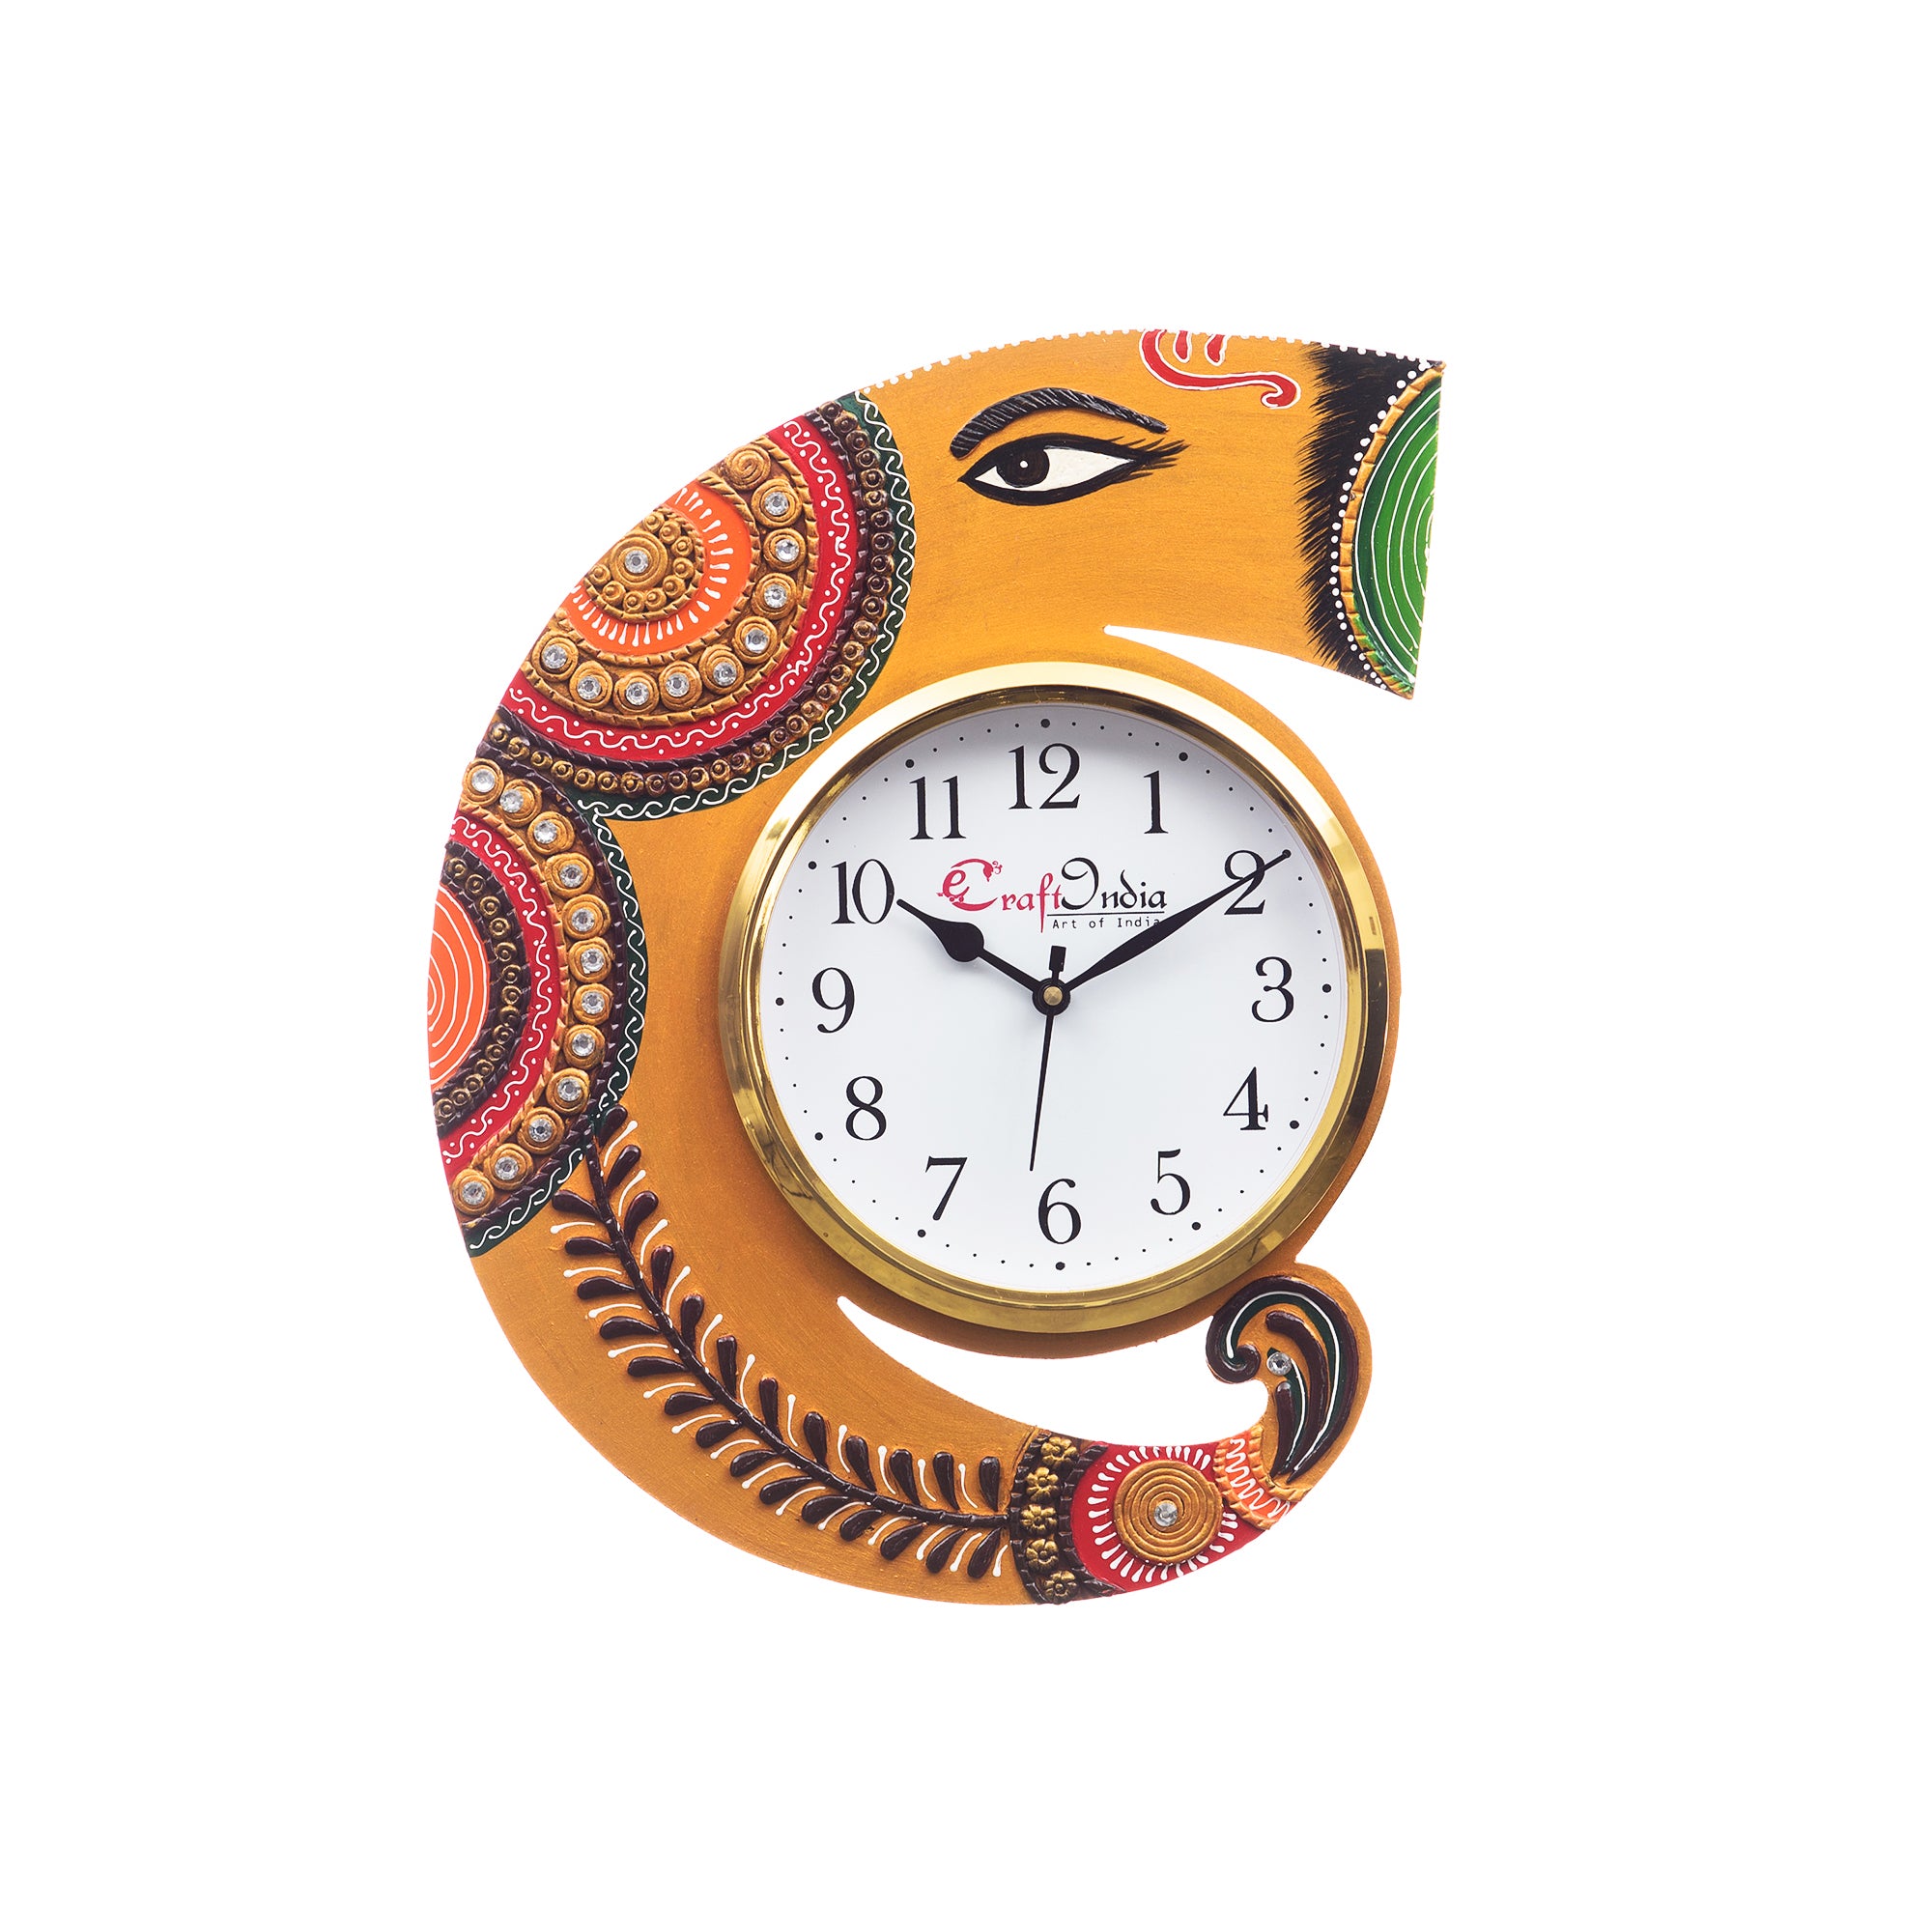 Handicraft Lord Ganesha Analog Wall Clock (Yellow & Green, With Glass)